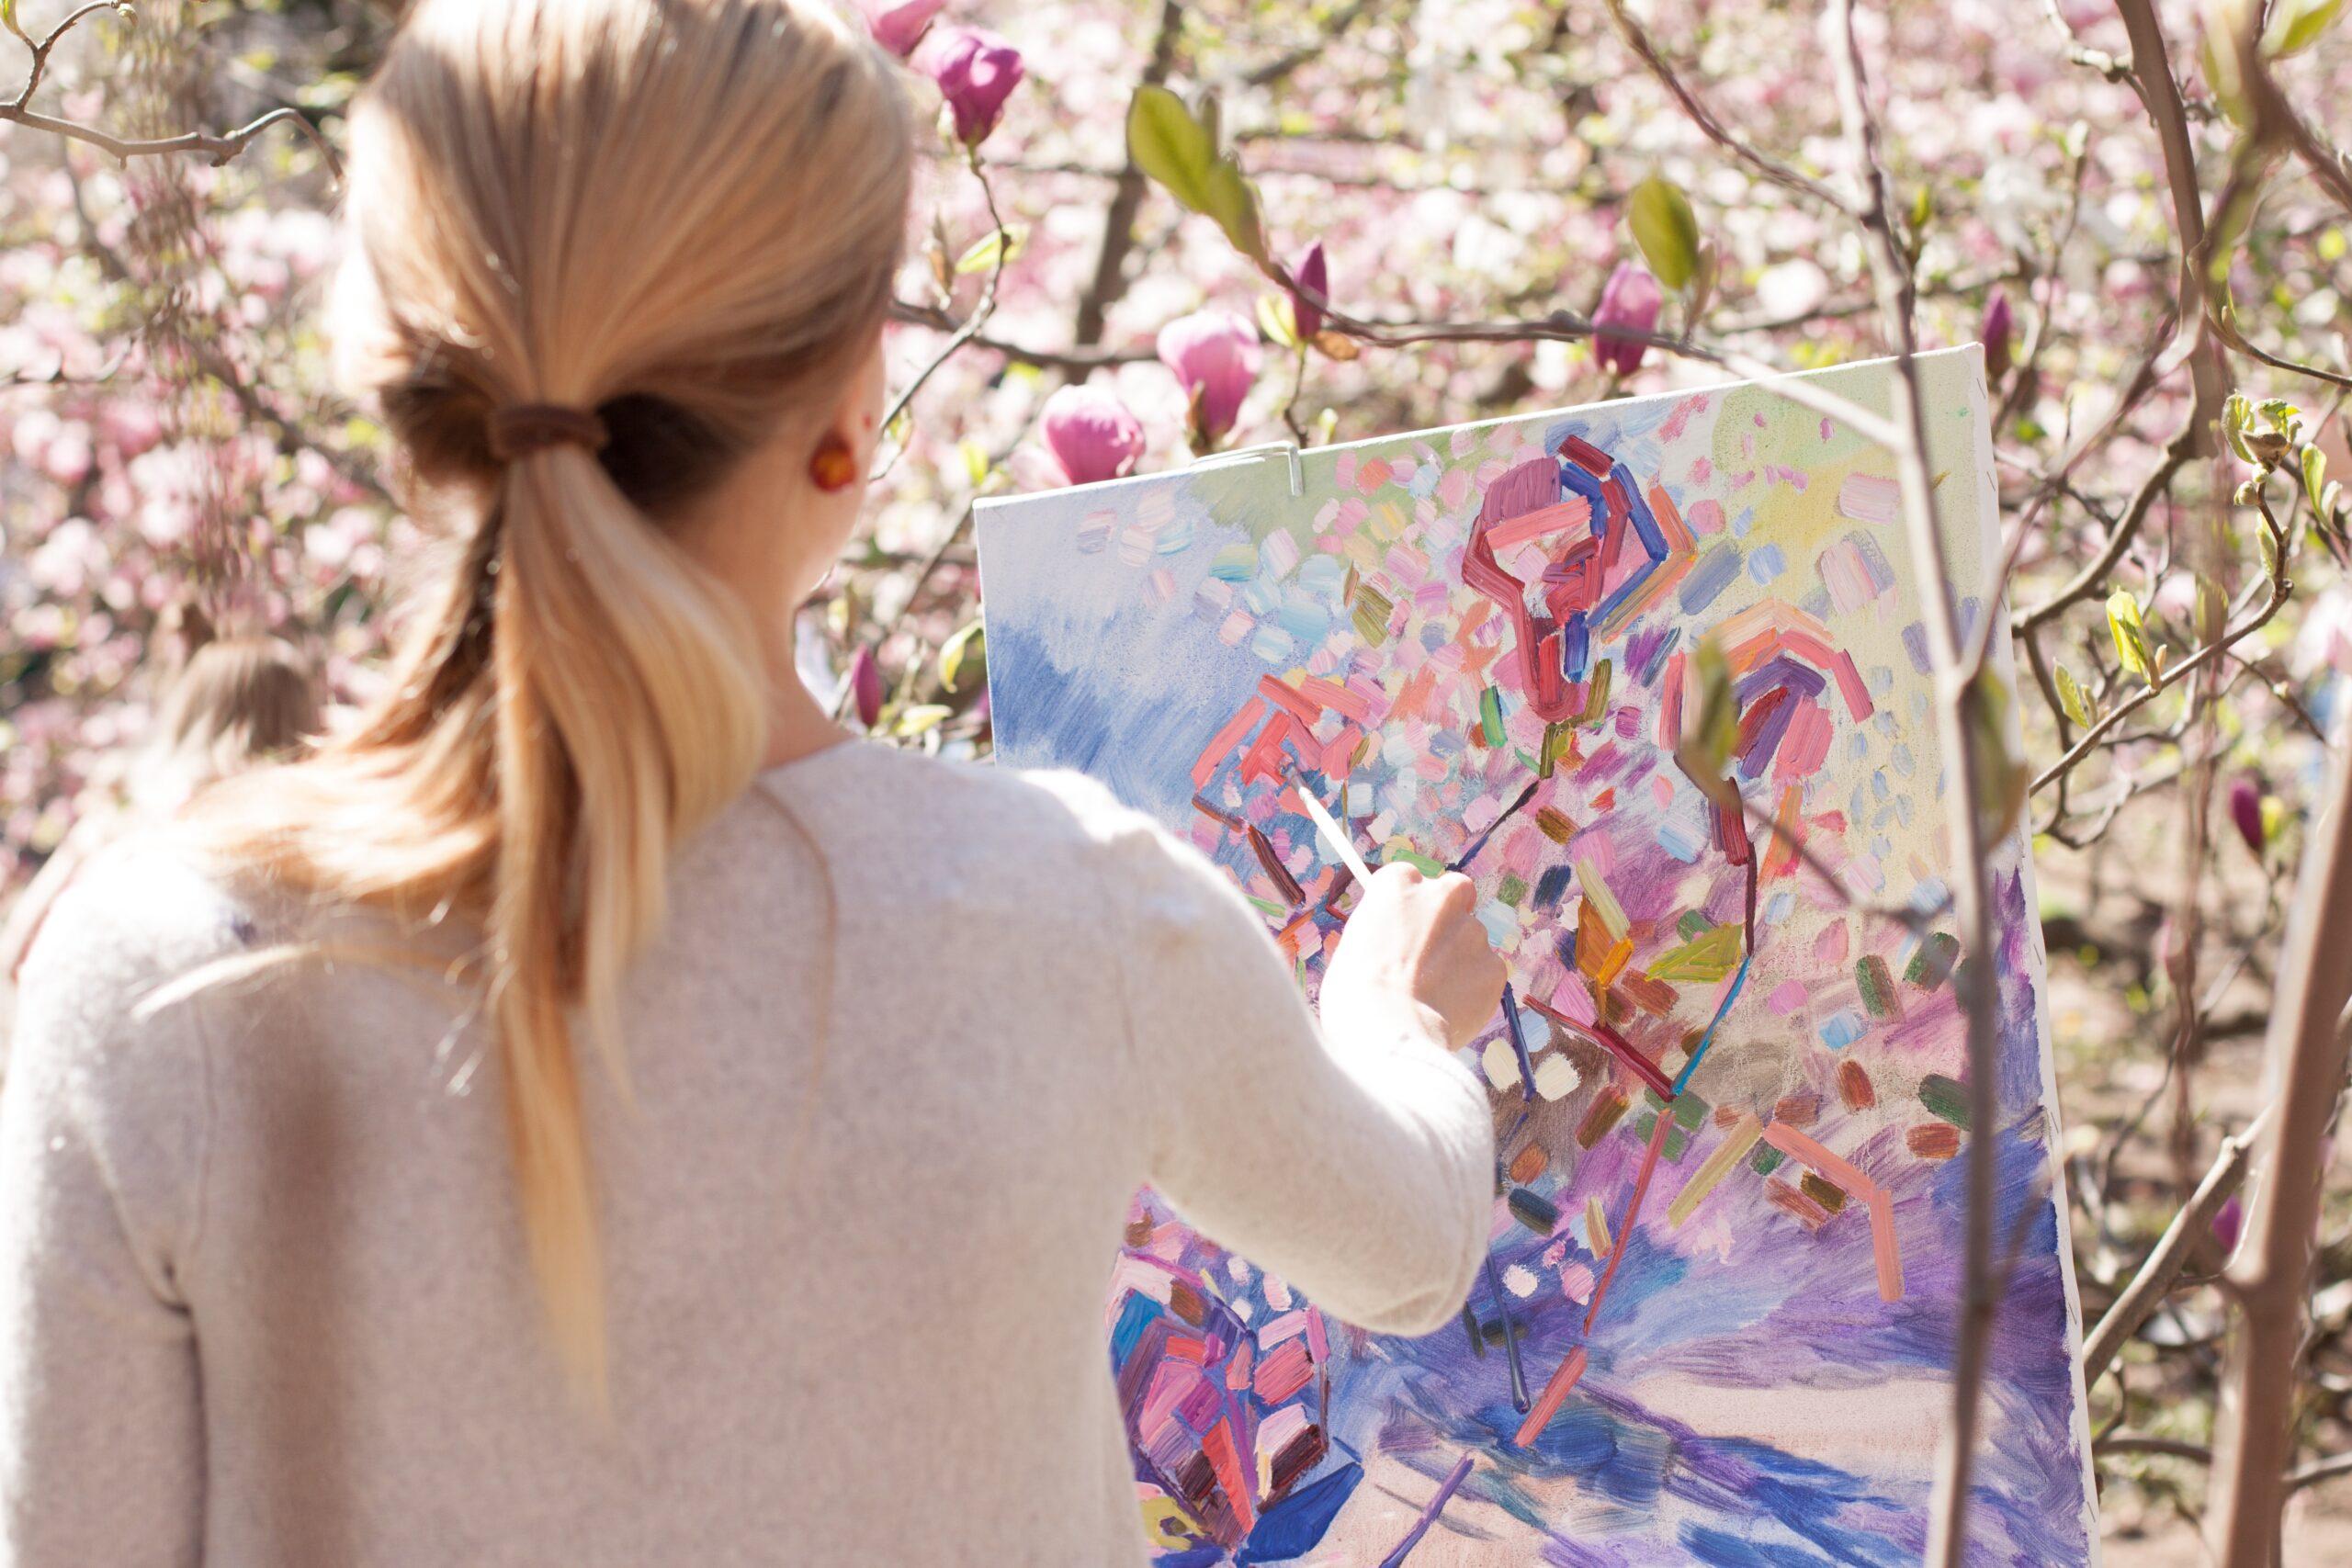 Photo: Female artist painting a nature scene.